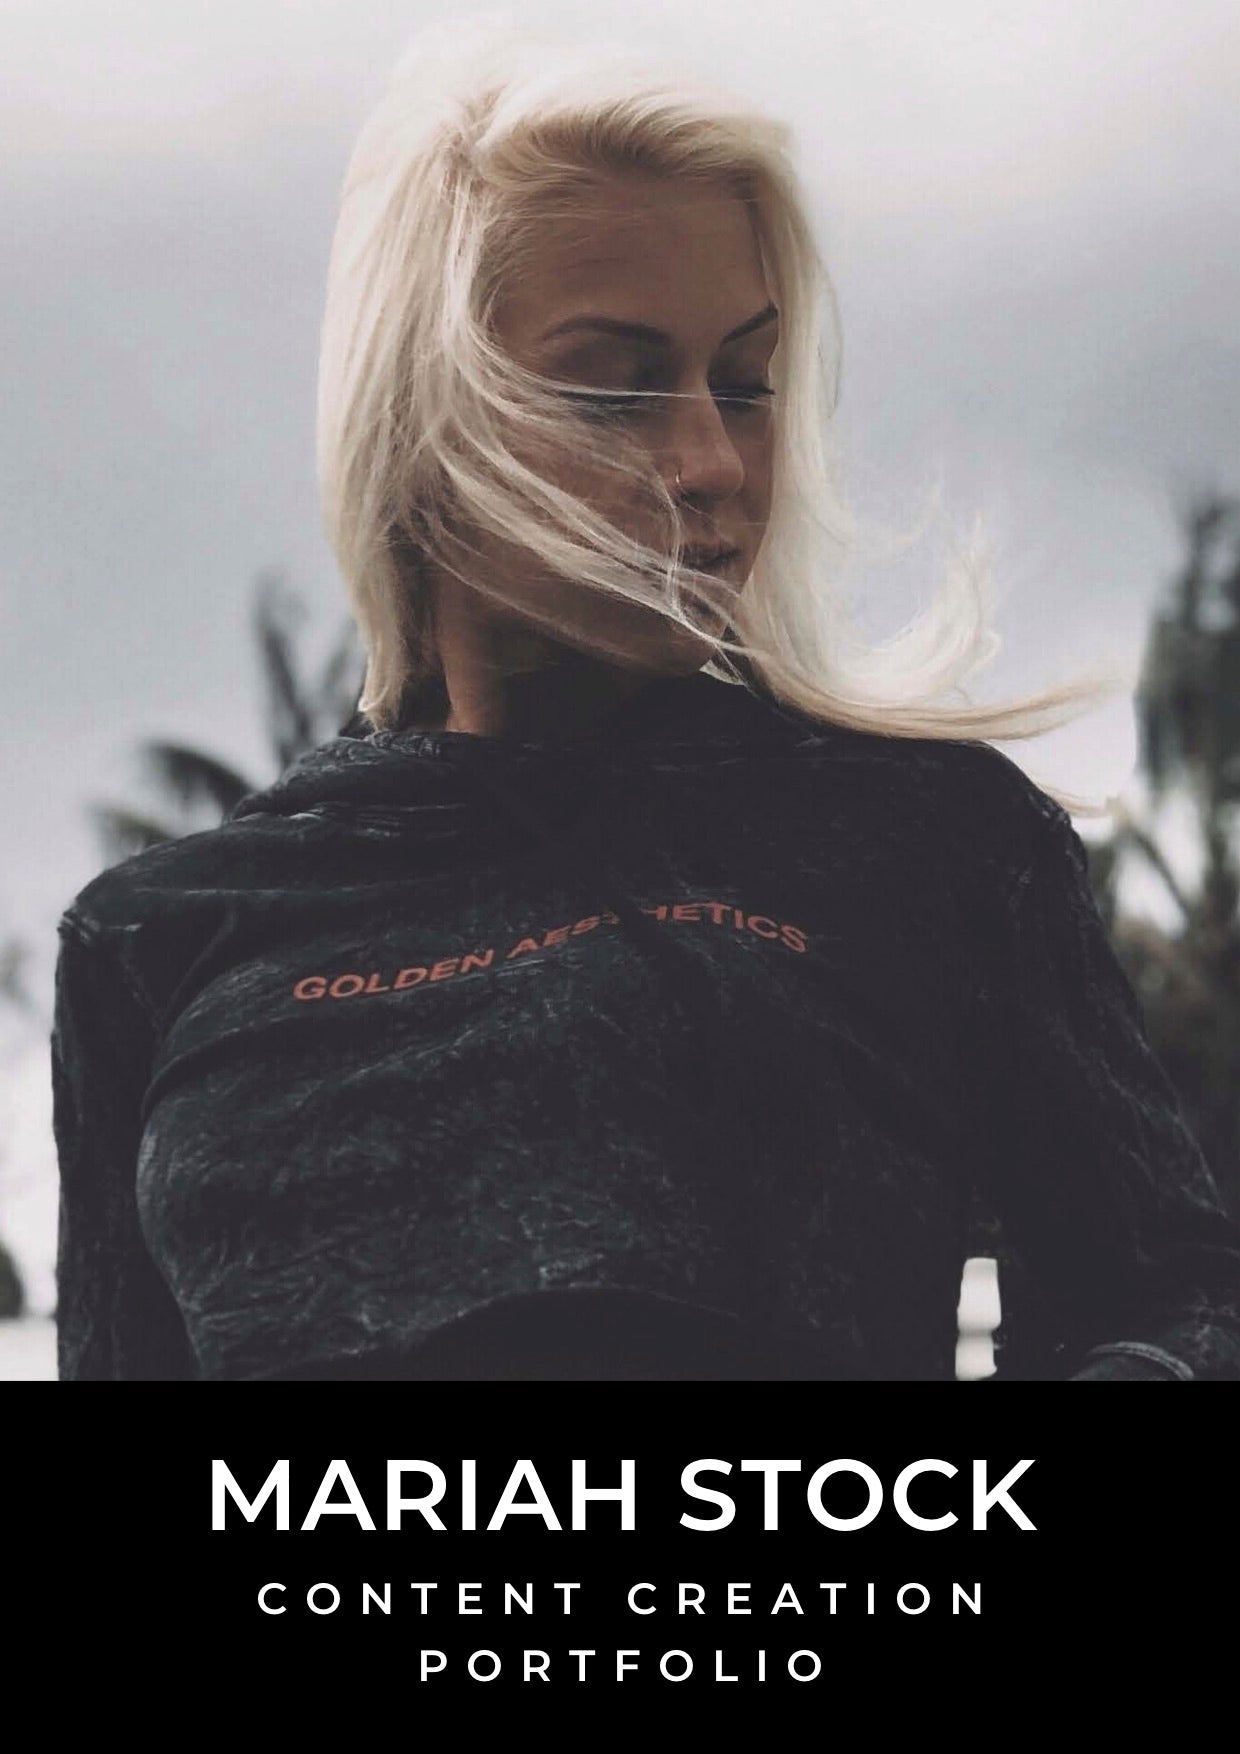 Mariah Stock - Content Creation